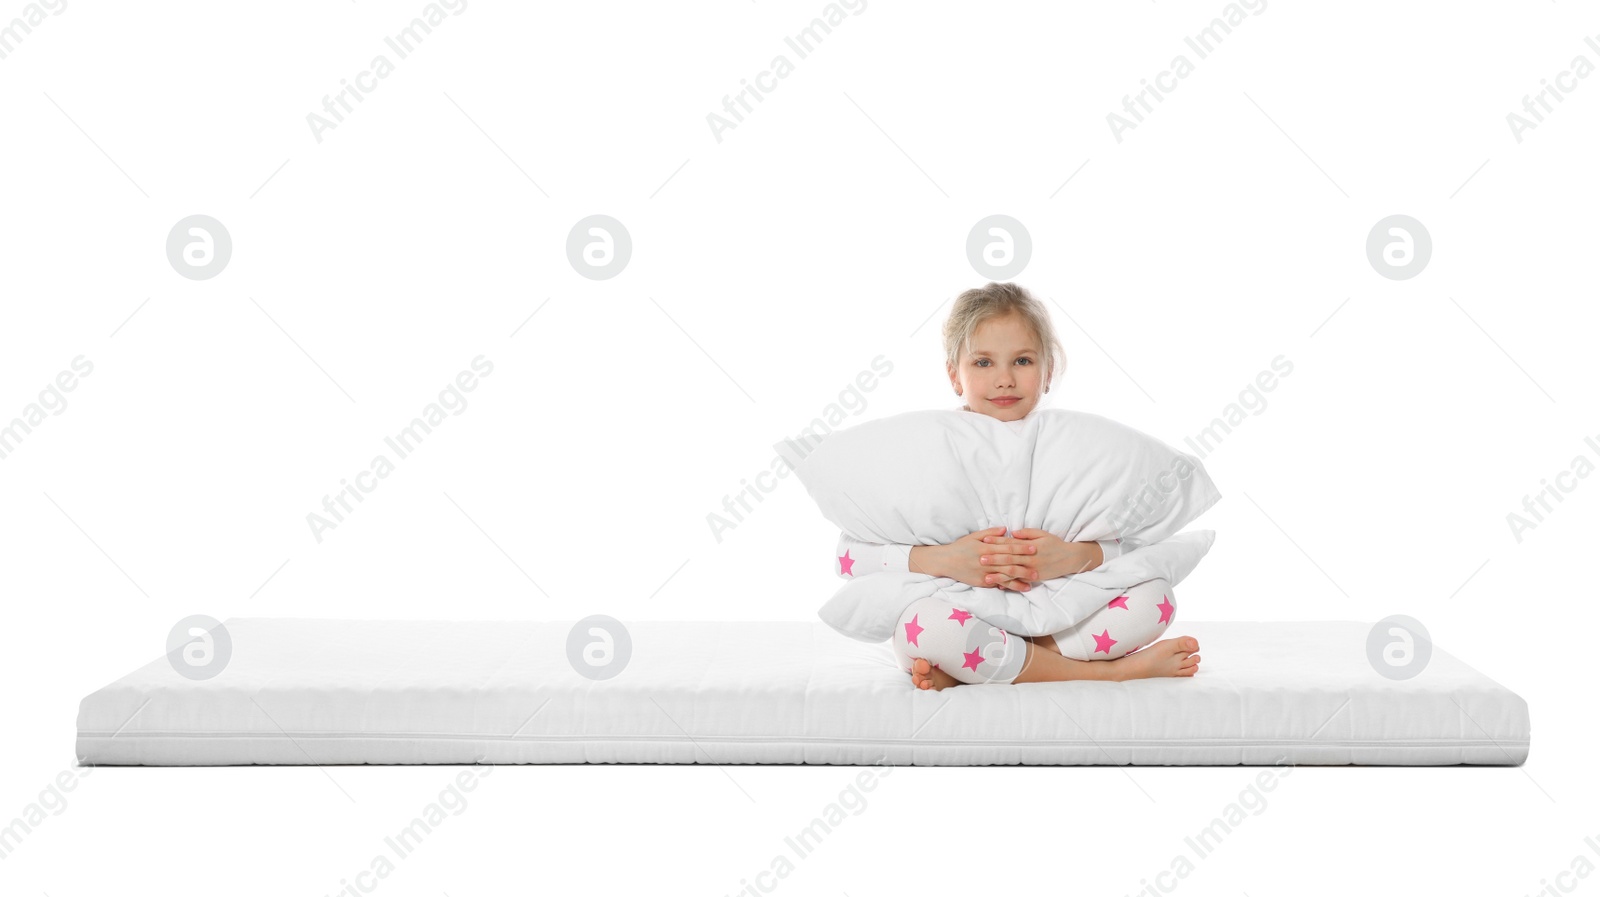 Photo of Little girl hugging pillow on mattress against white background